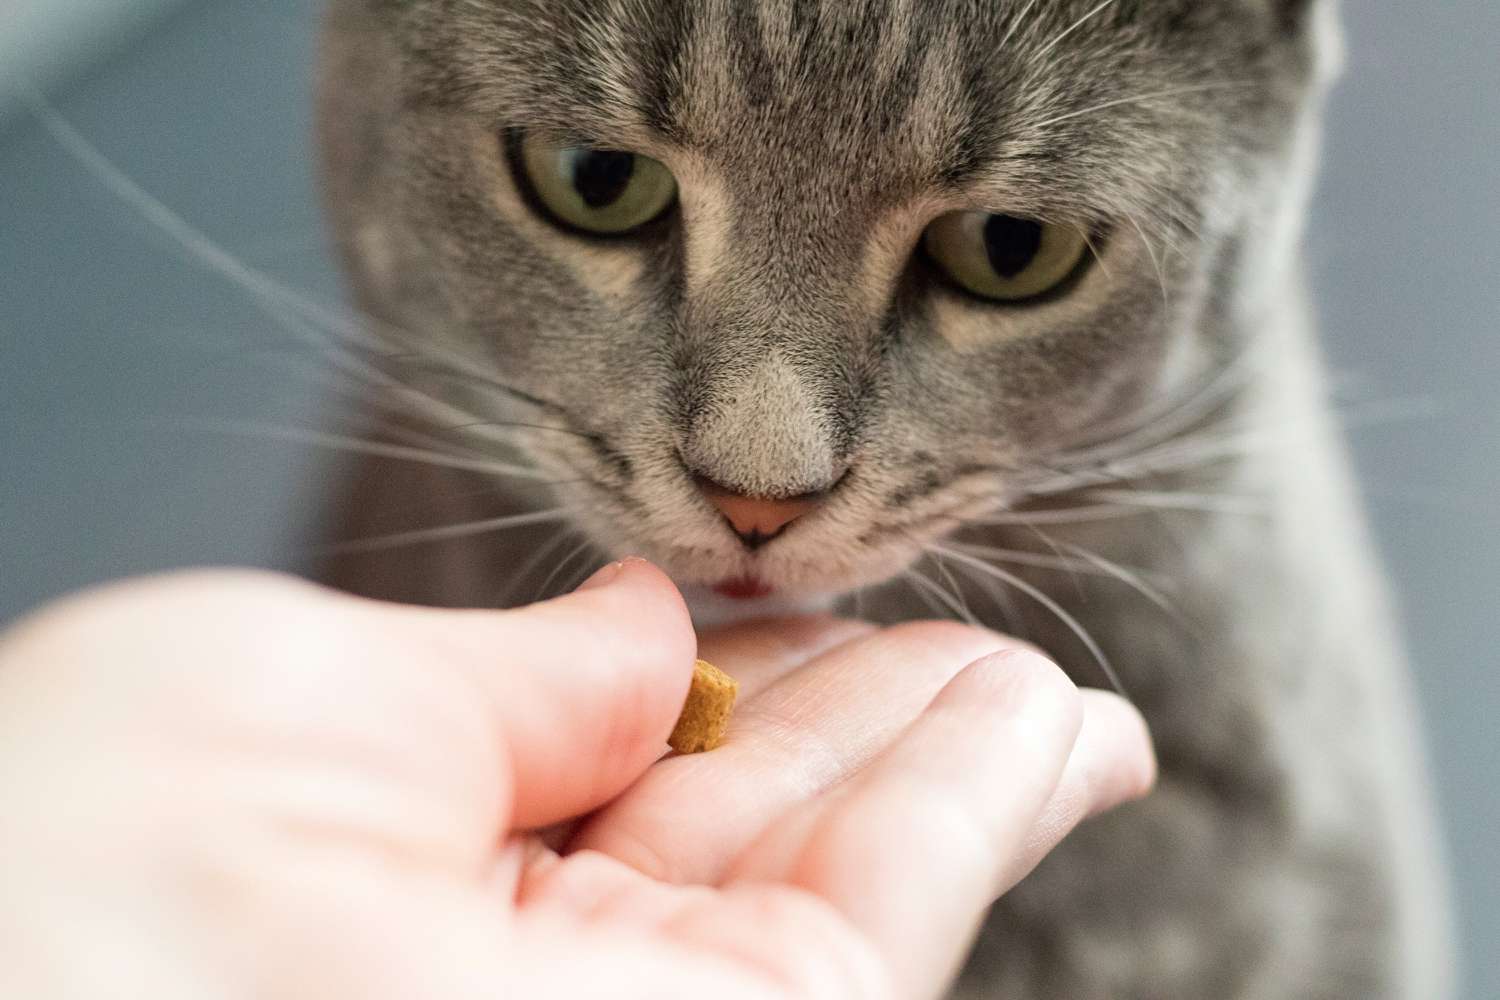 cat treat getty